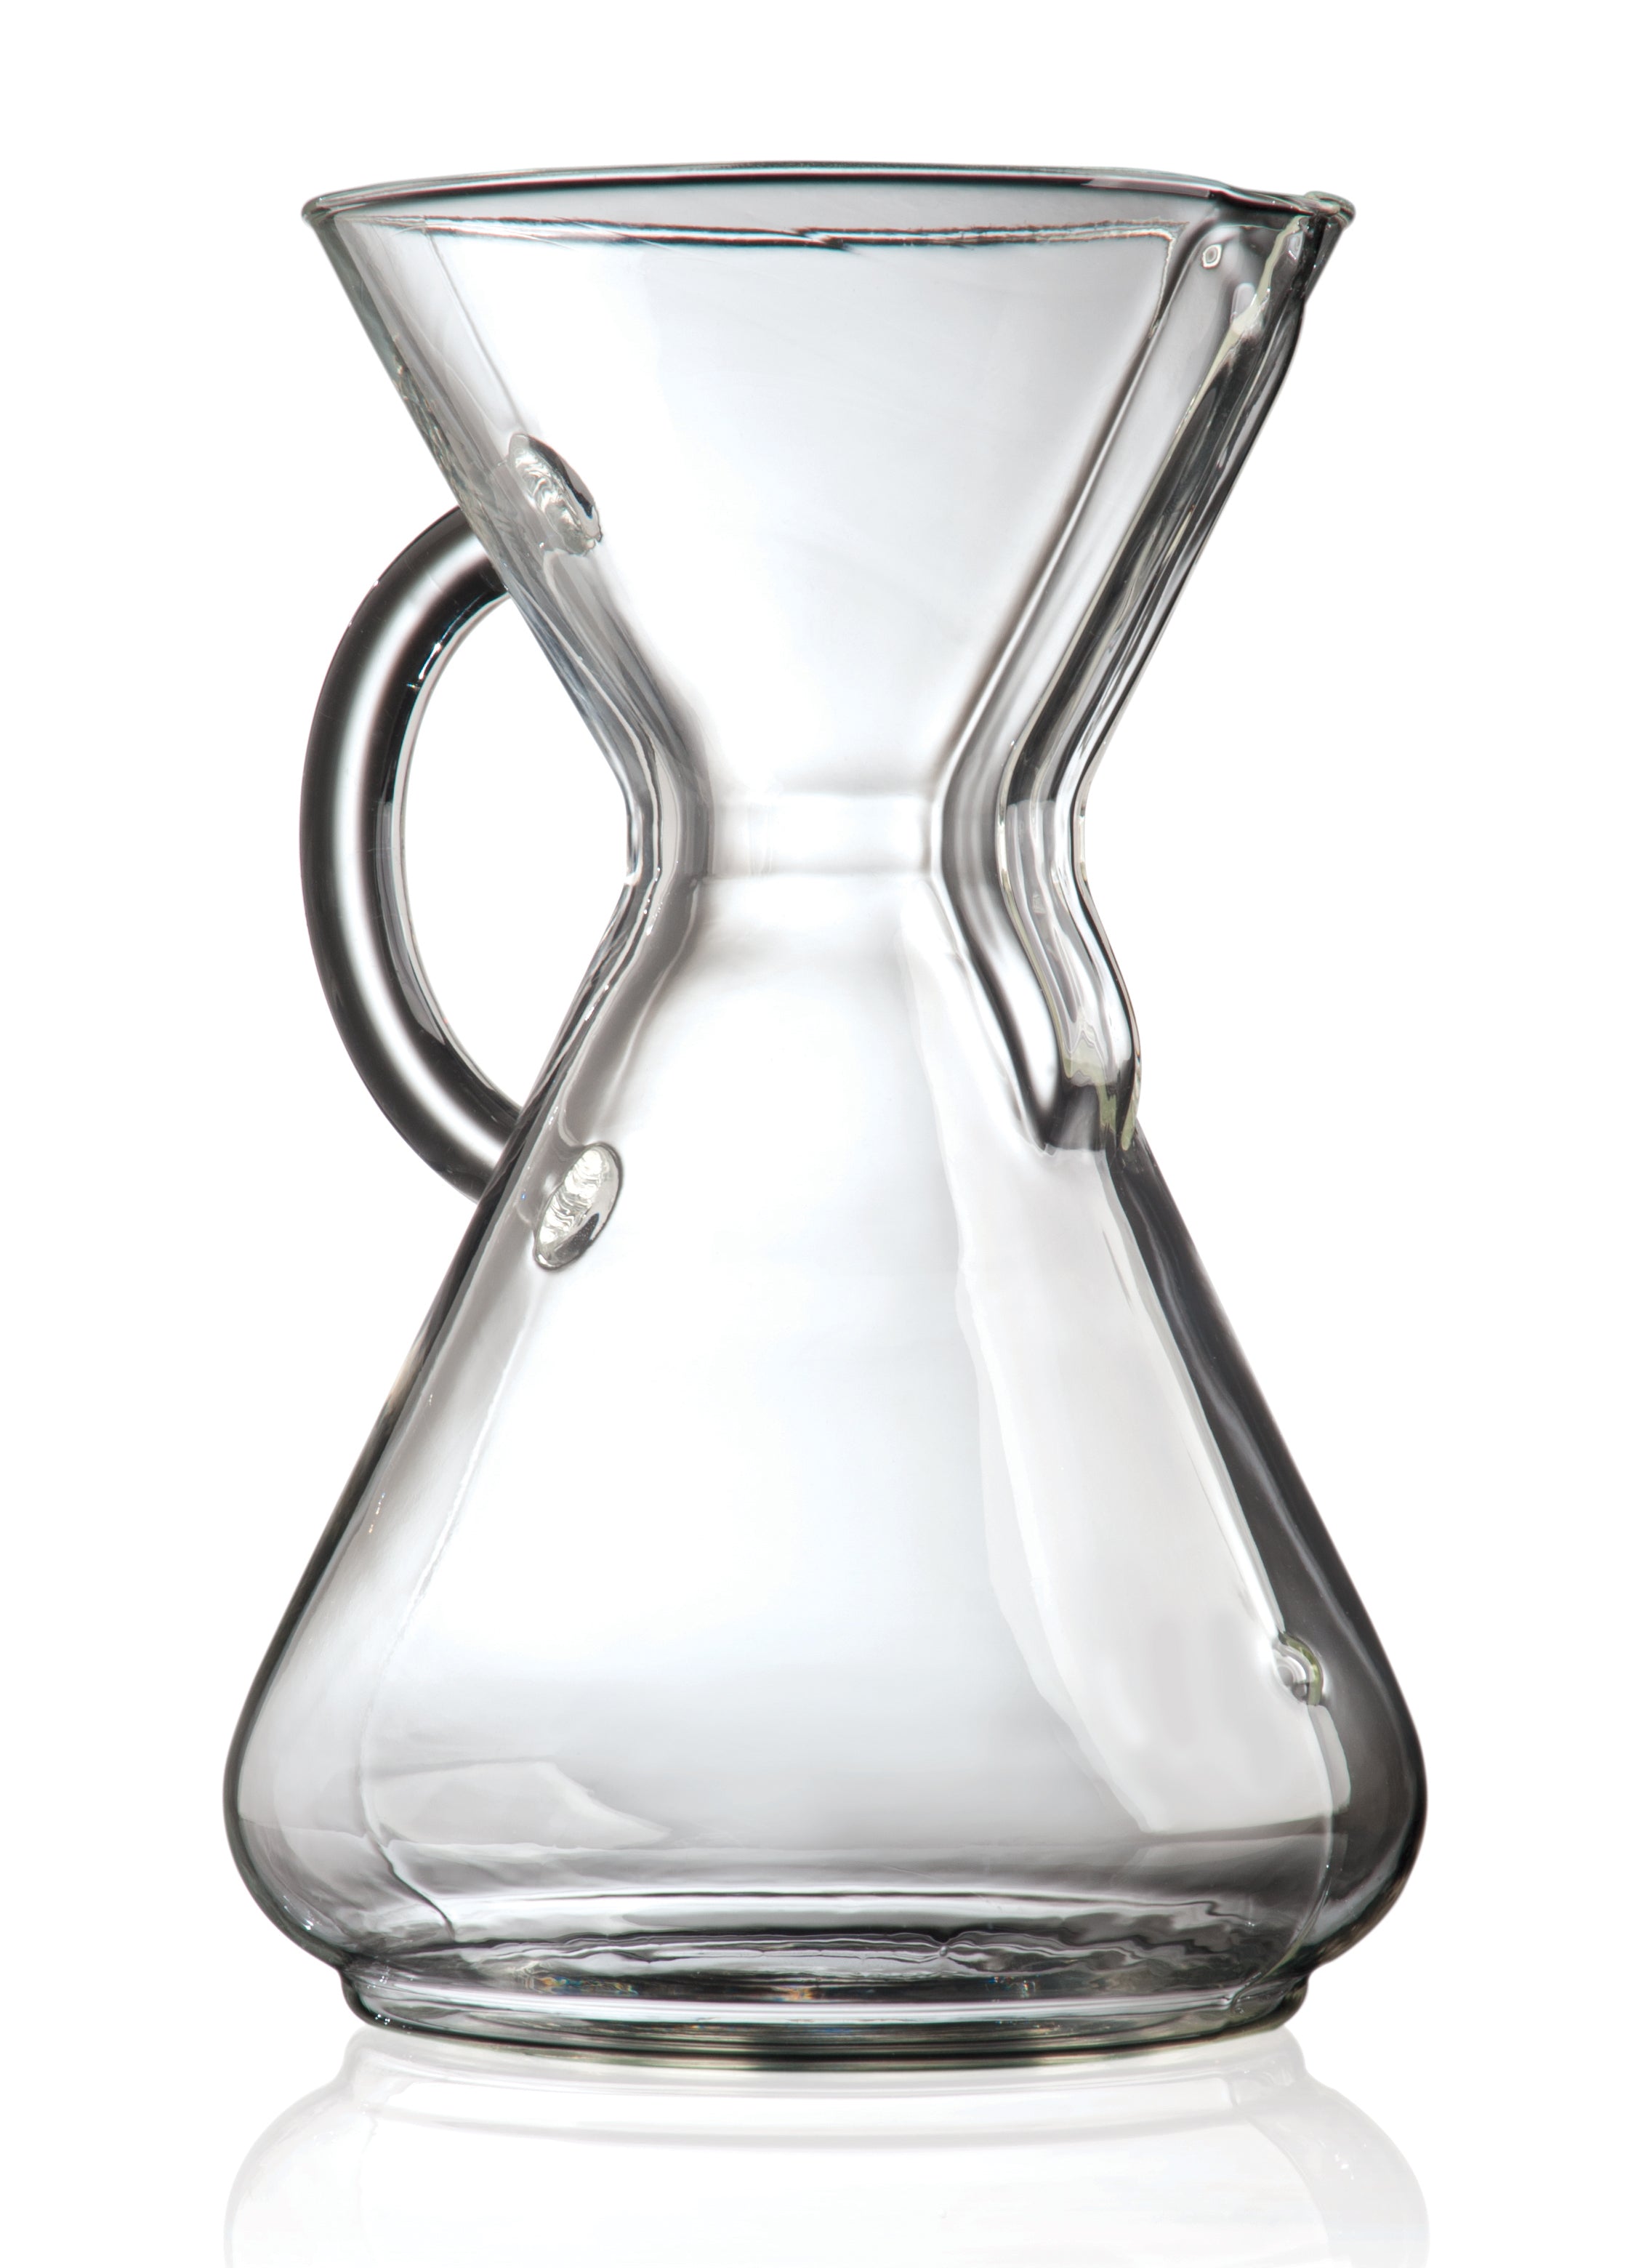 Chemex Coffeemaker - Glass Handle Series